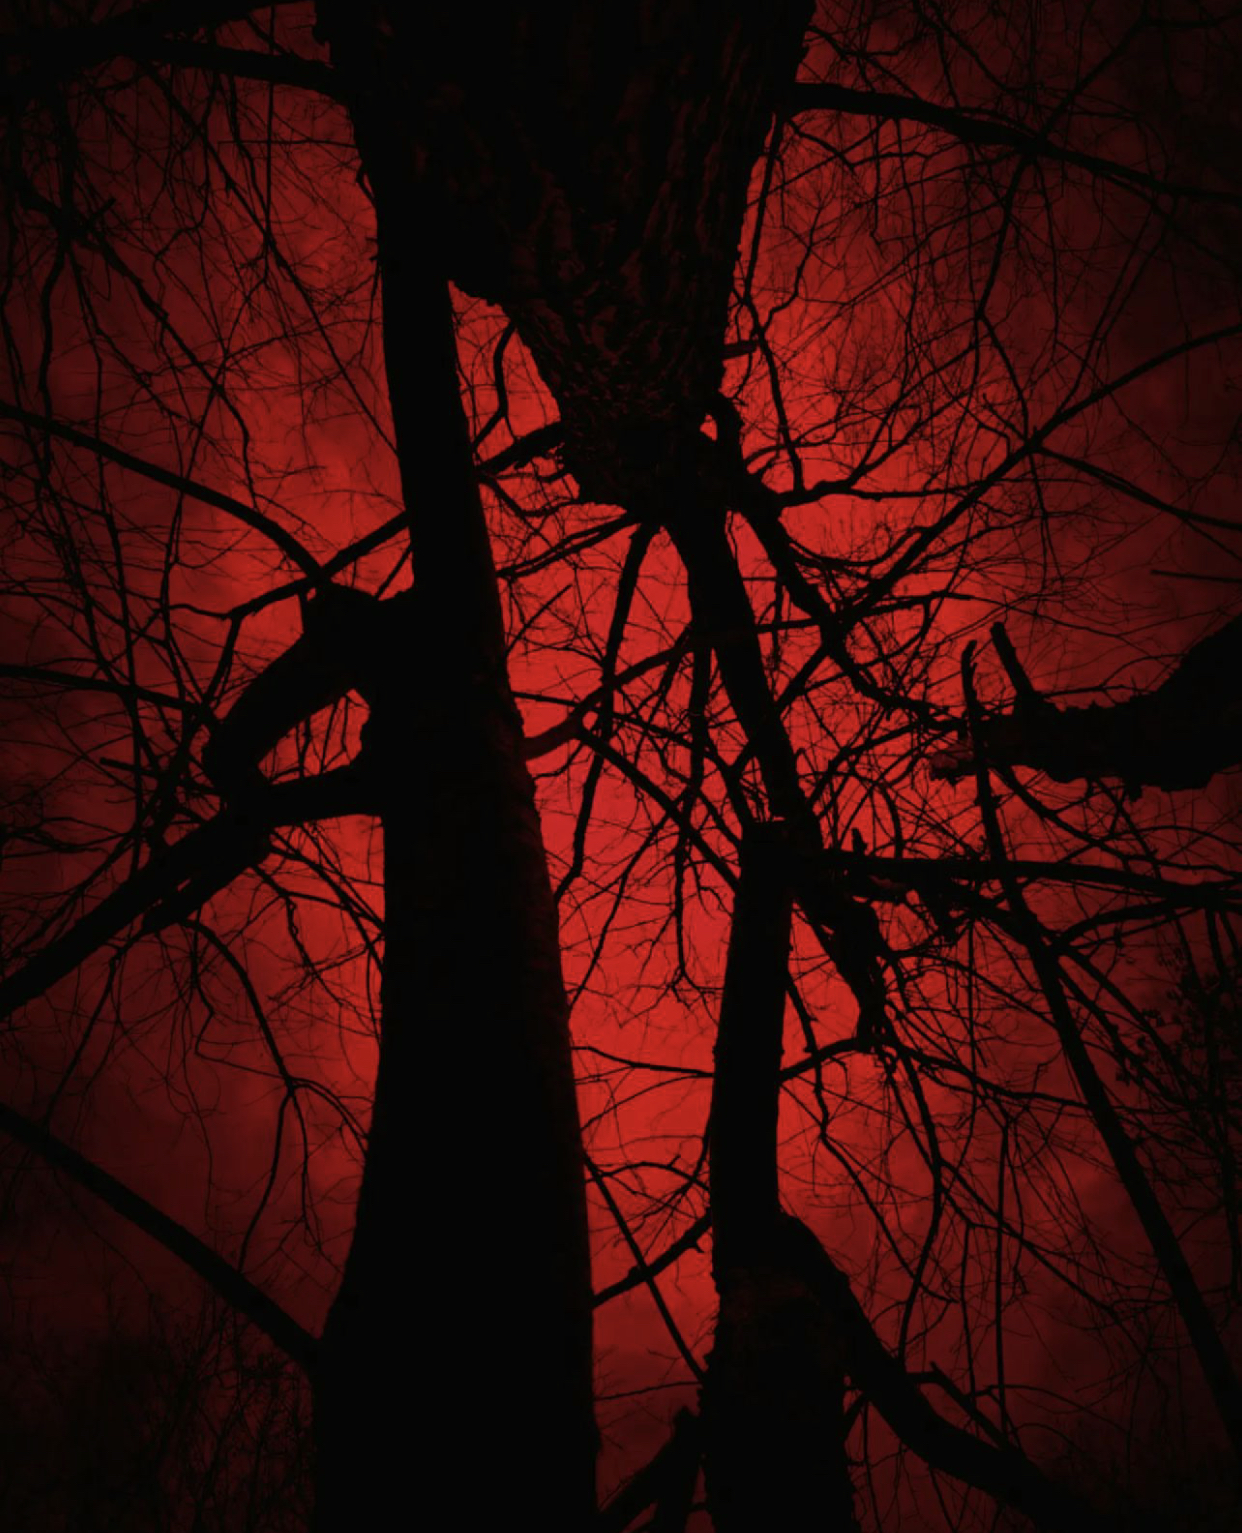 Blood Red Night by eolmedillo on DeviantArt